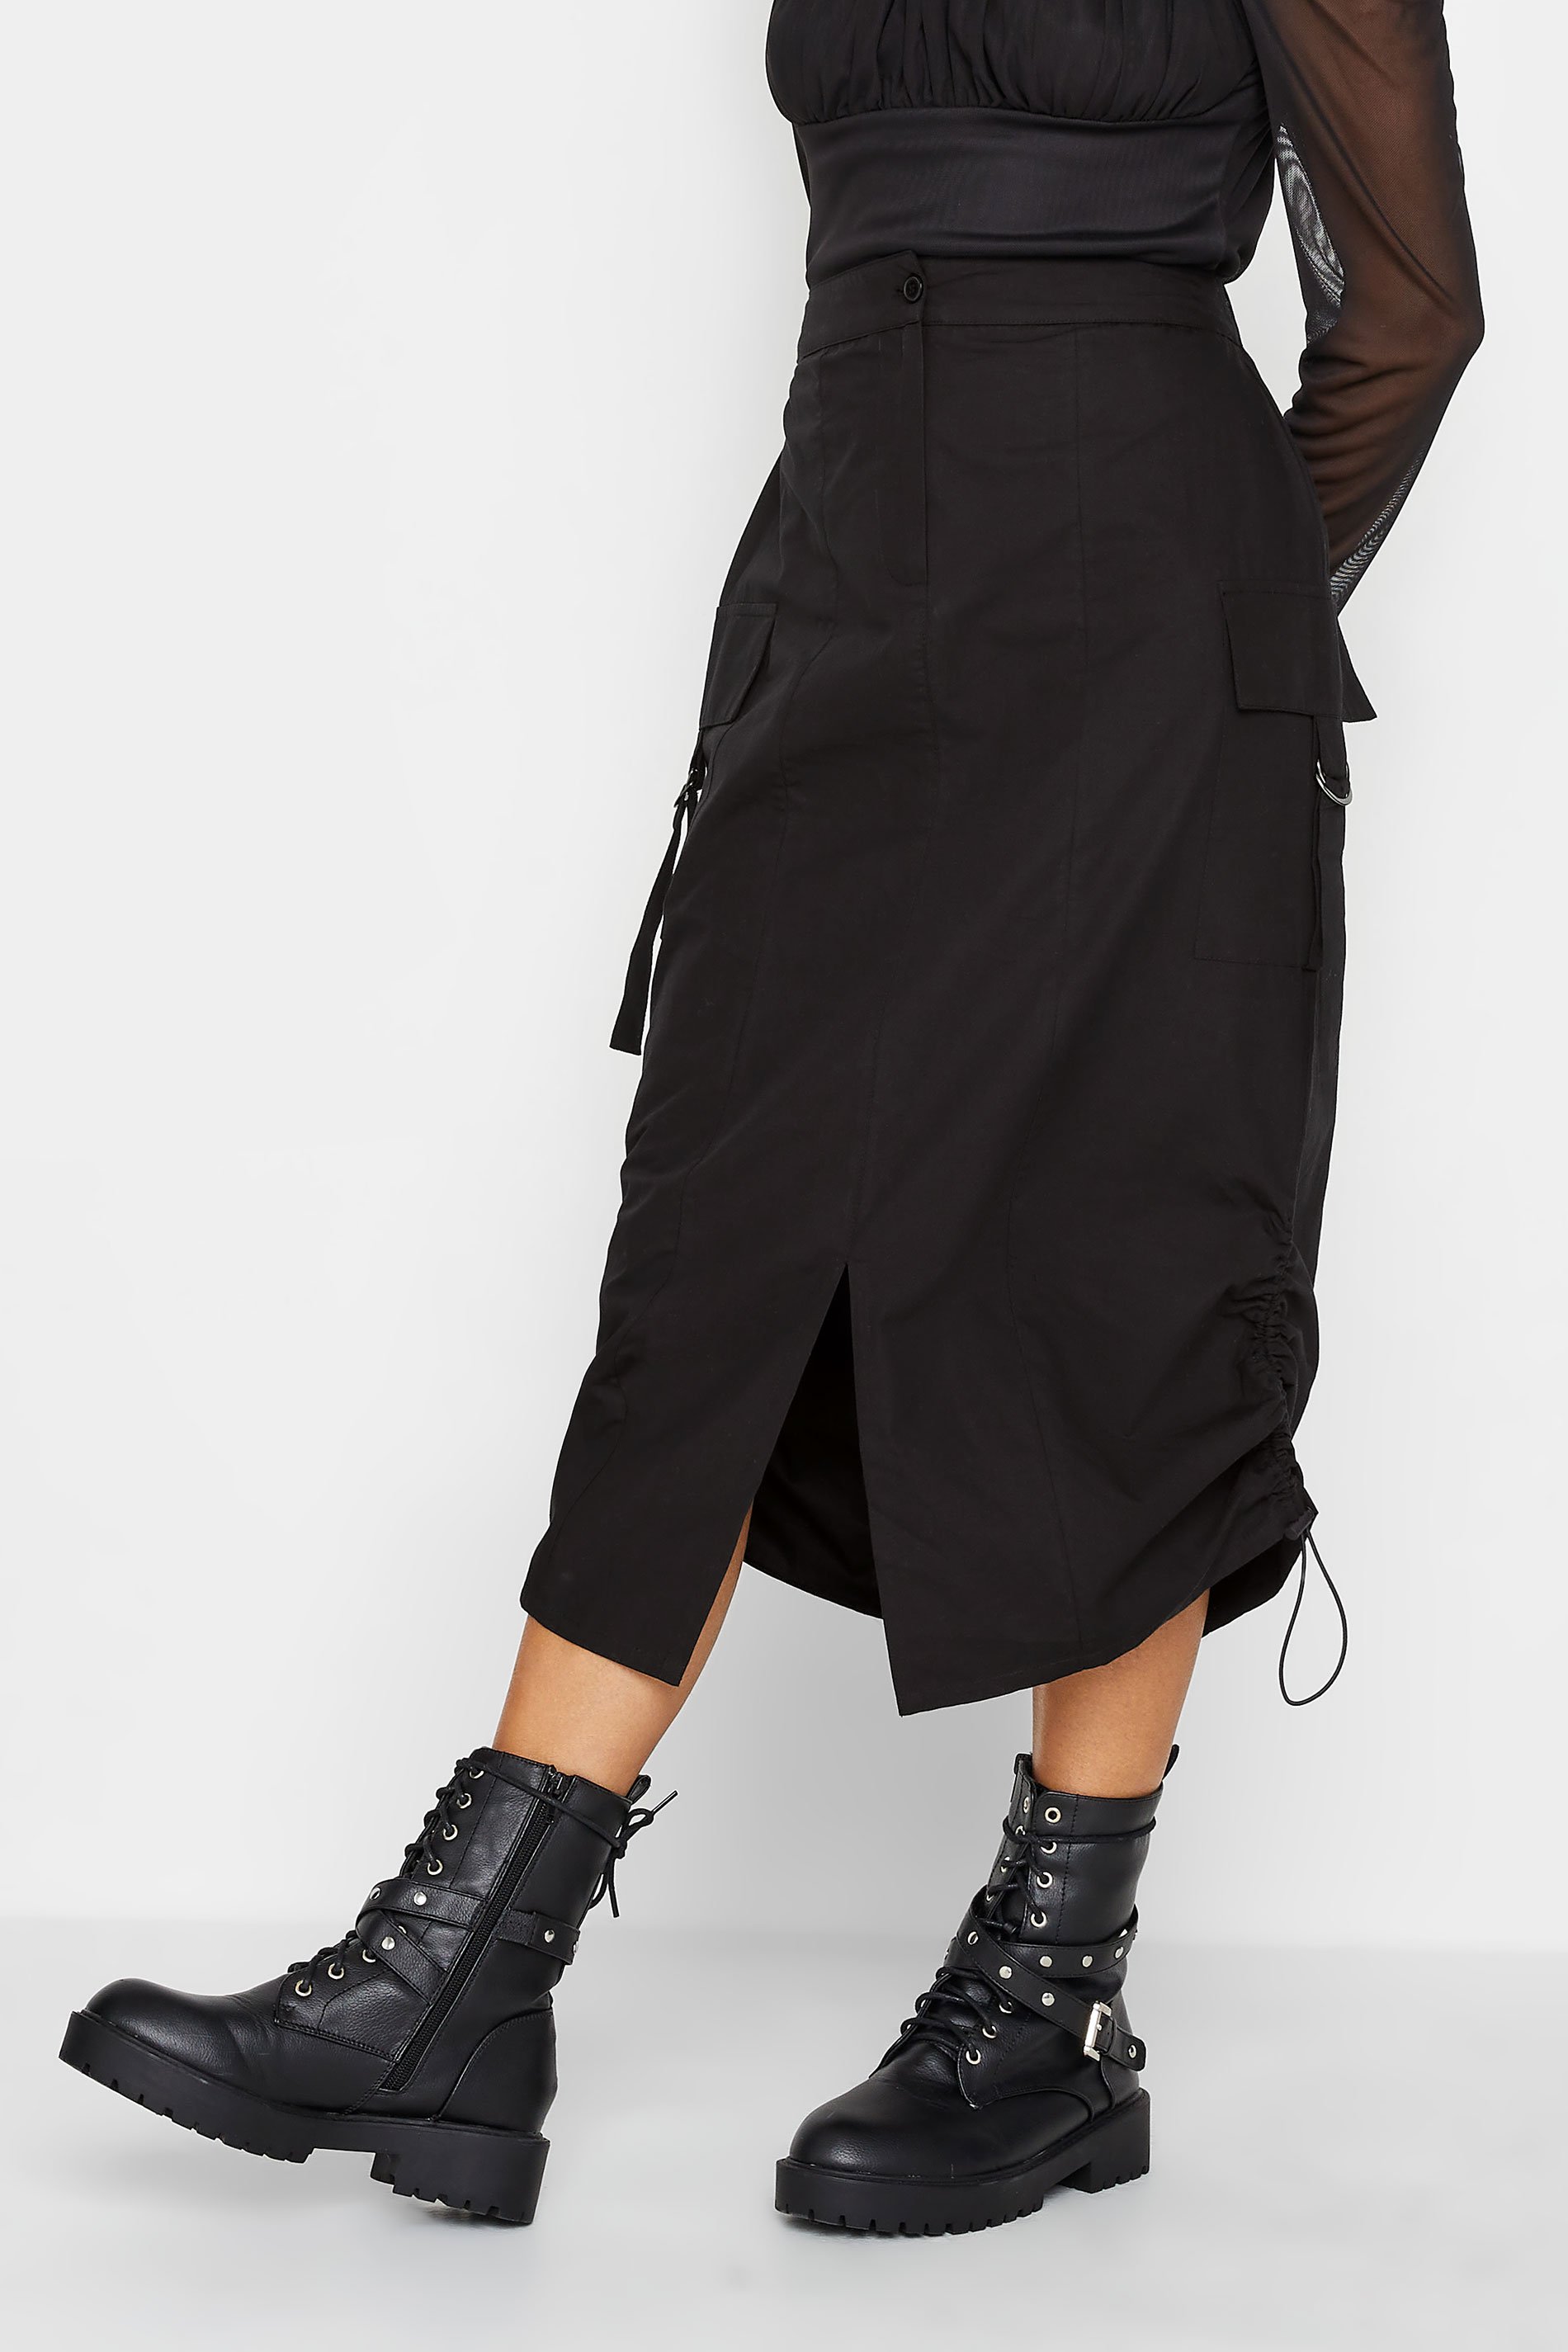 PixieGirl Black Cargo Ruched Midi Skirt | PixieGirl  1